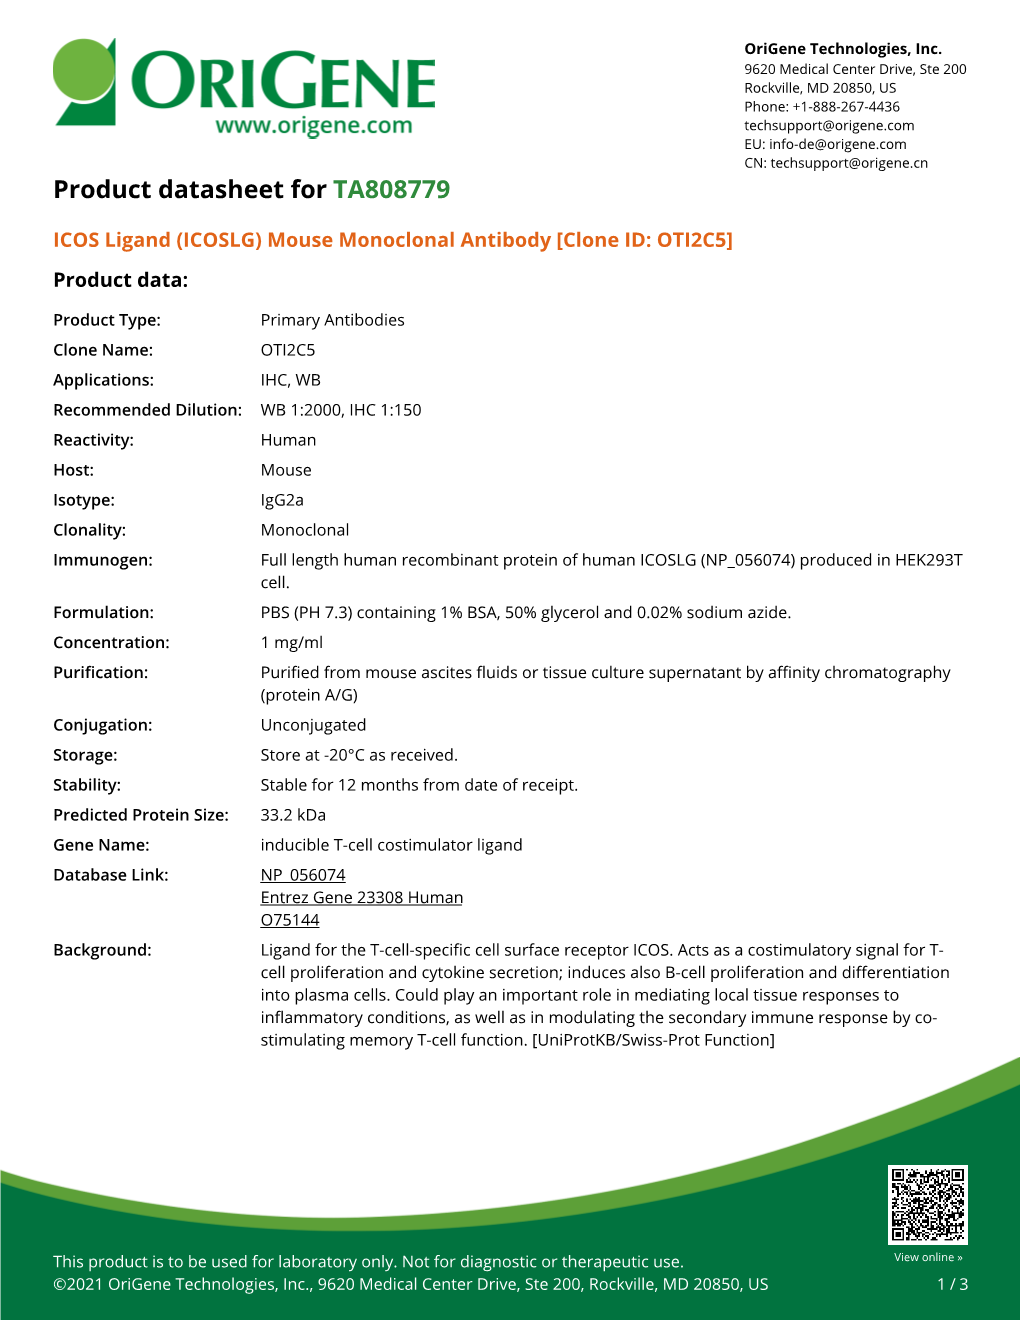 (ICOSLG) Mouse Monoclonal Antibody [Clone ID: OTI2C5] Product Data